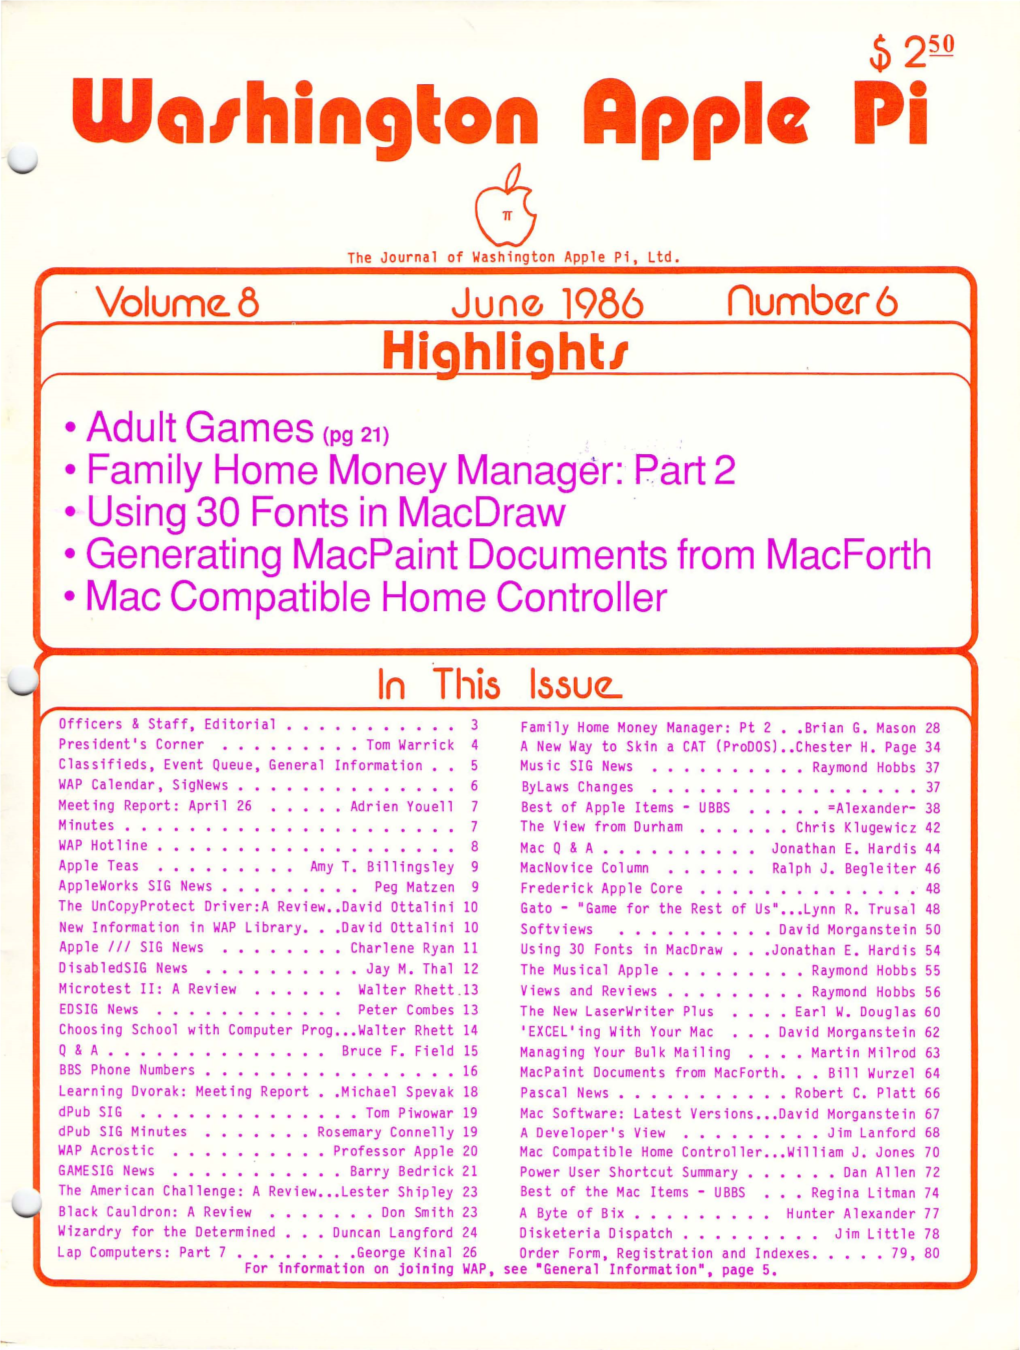 Washington Apple Pi Journal, June 1986